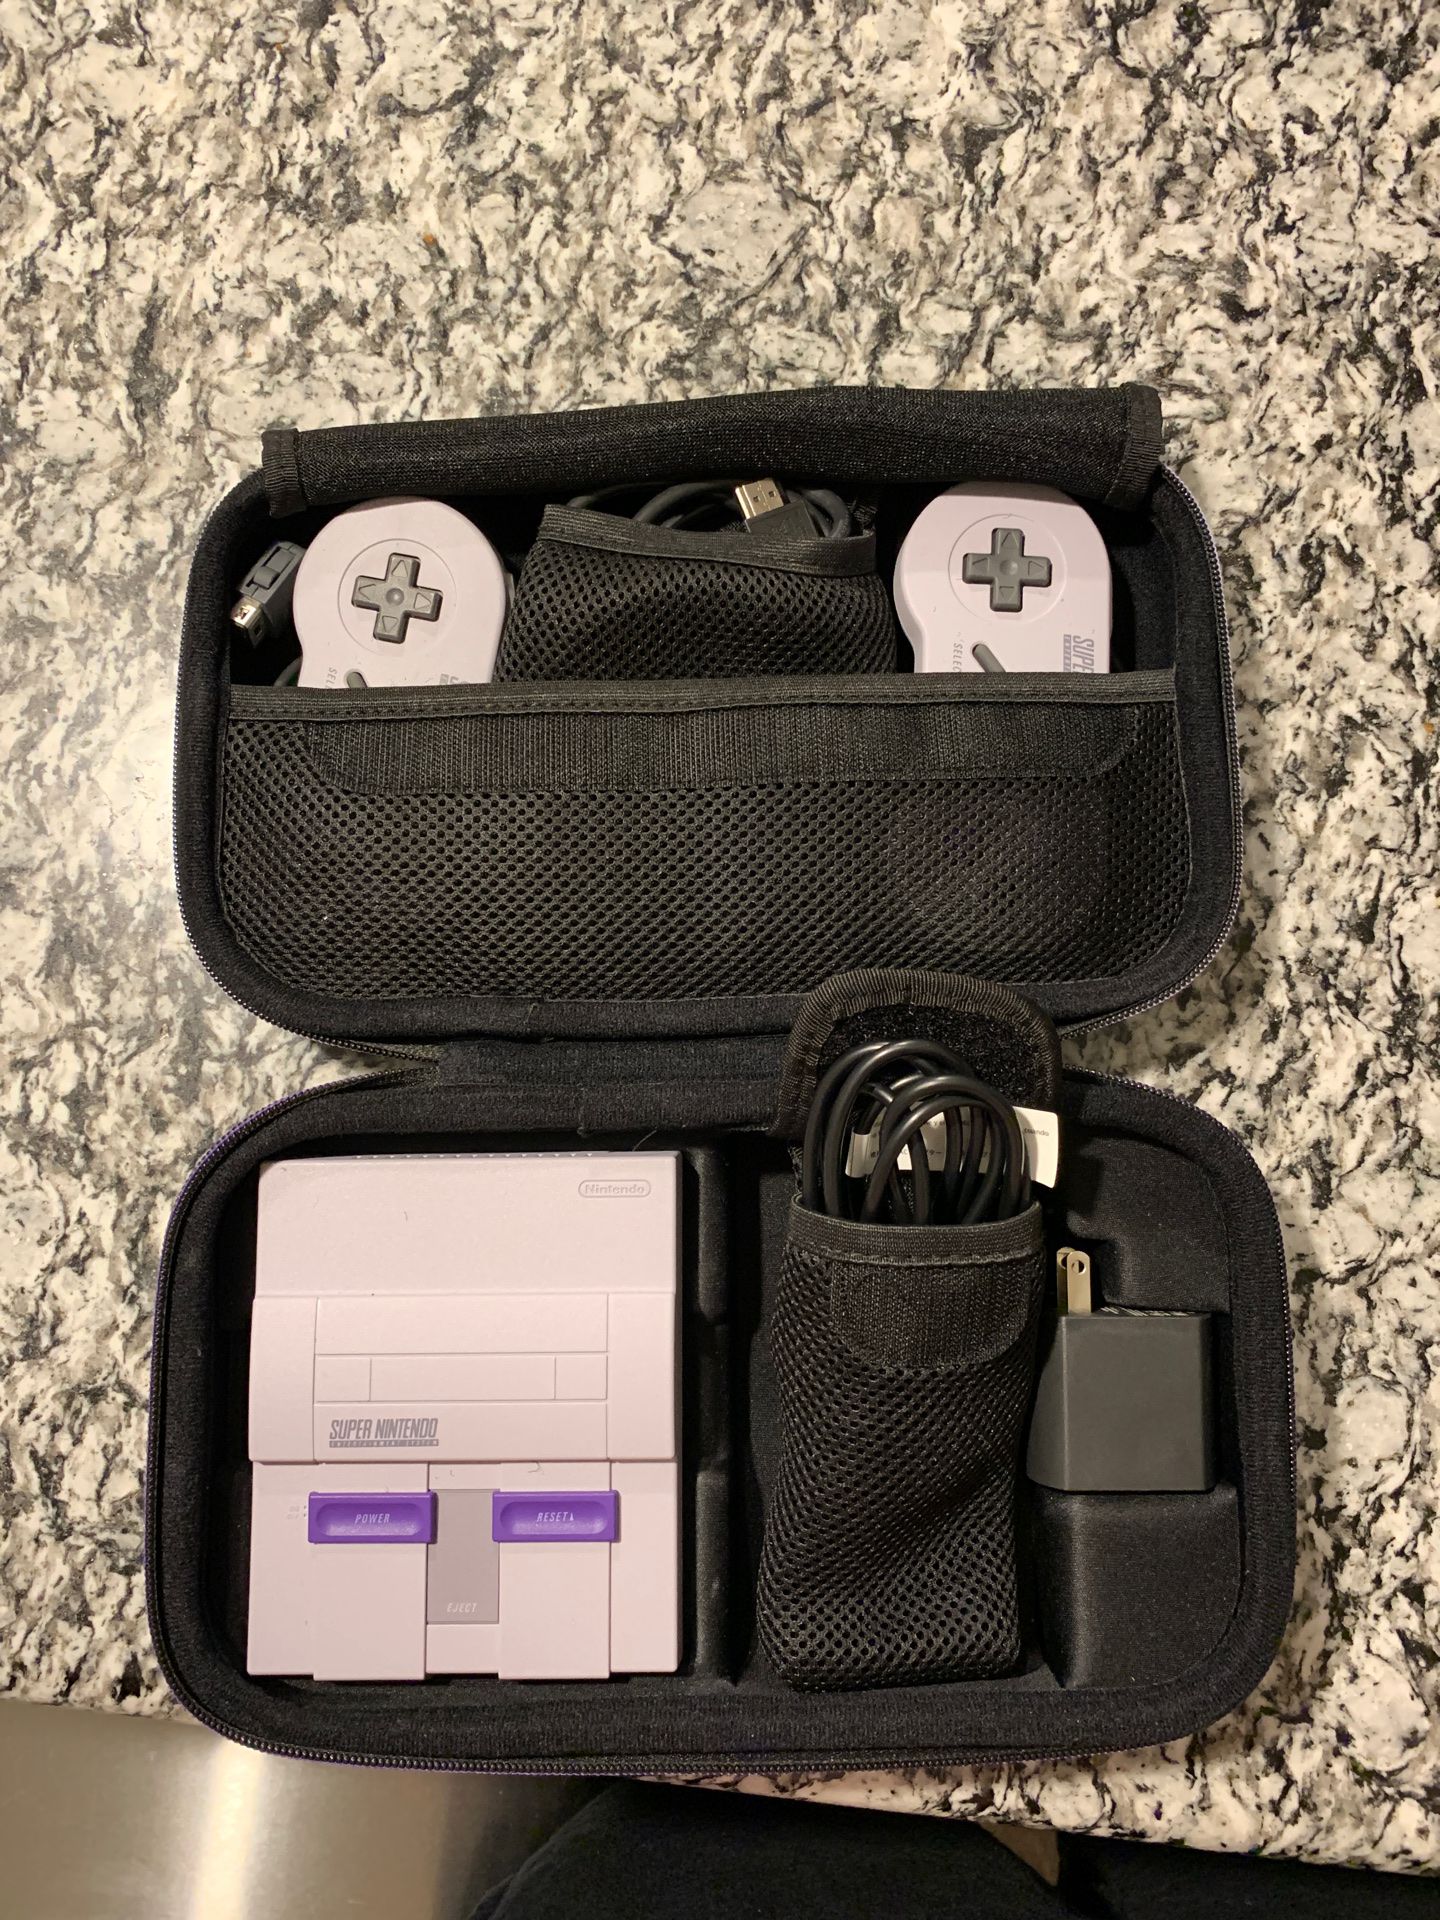 Super Nintendo Mini & official Nintendo travel case!